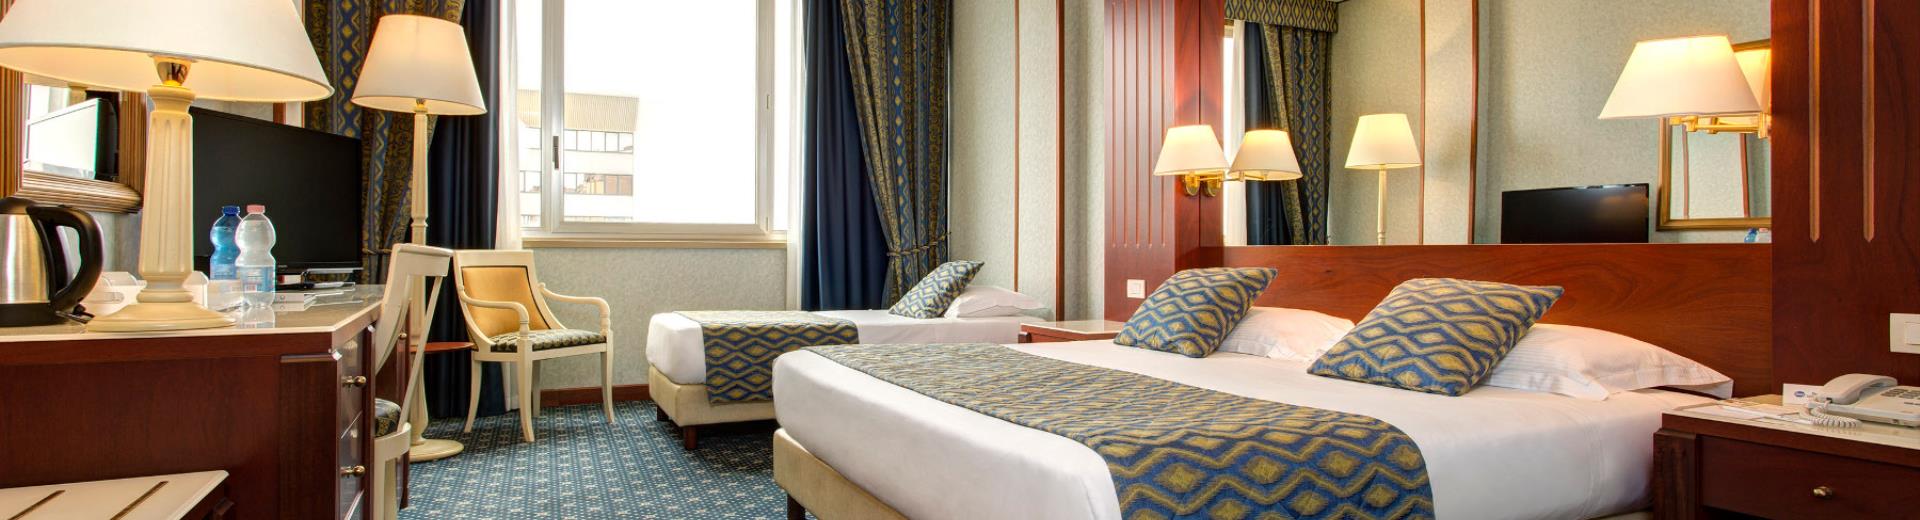 Classic Triple Room - CTC Hotel Verona 4 star